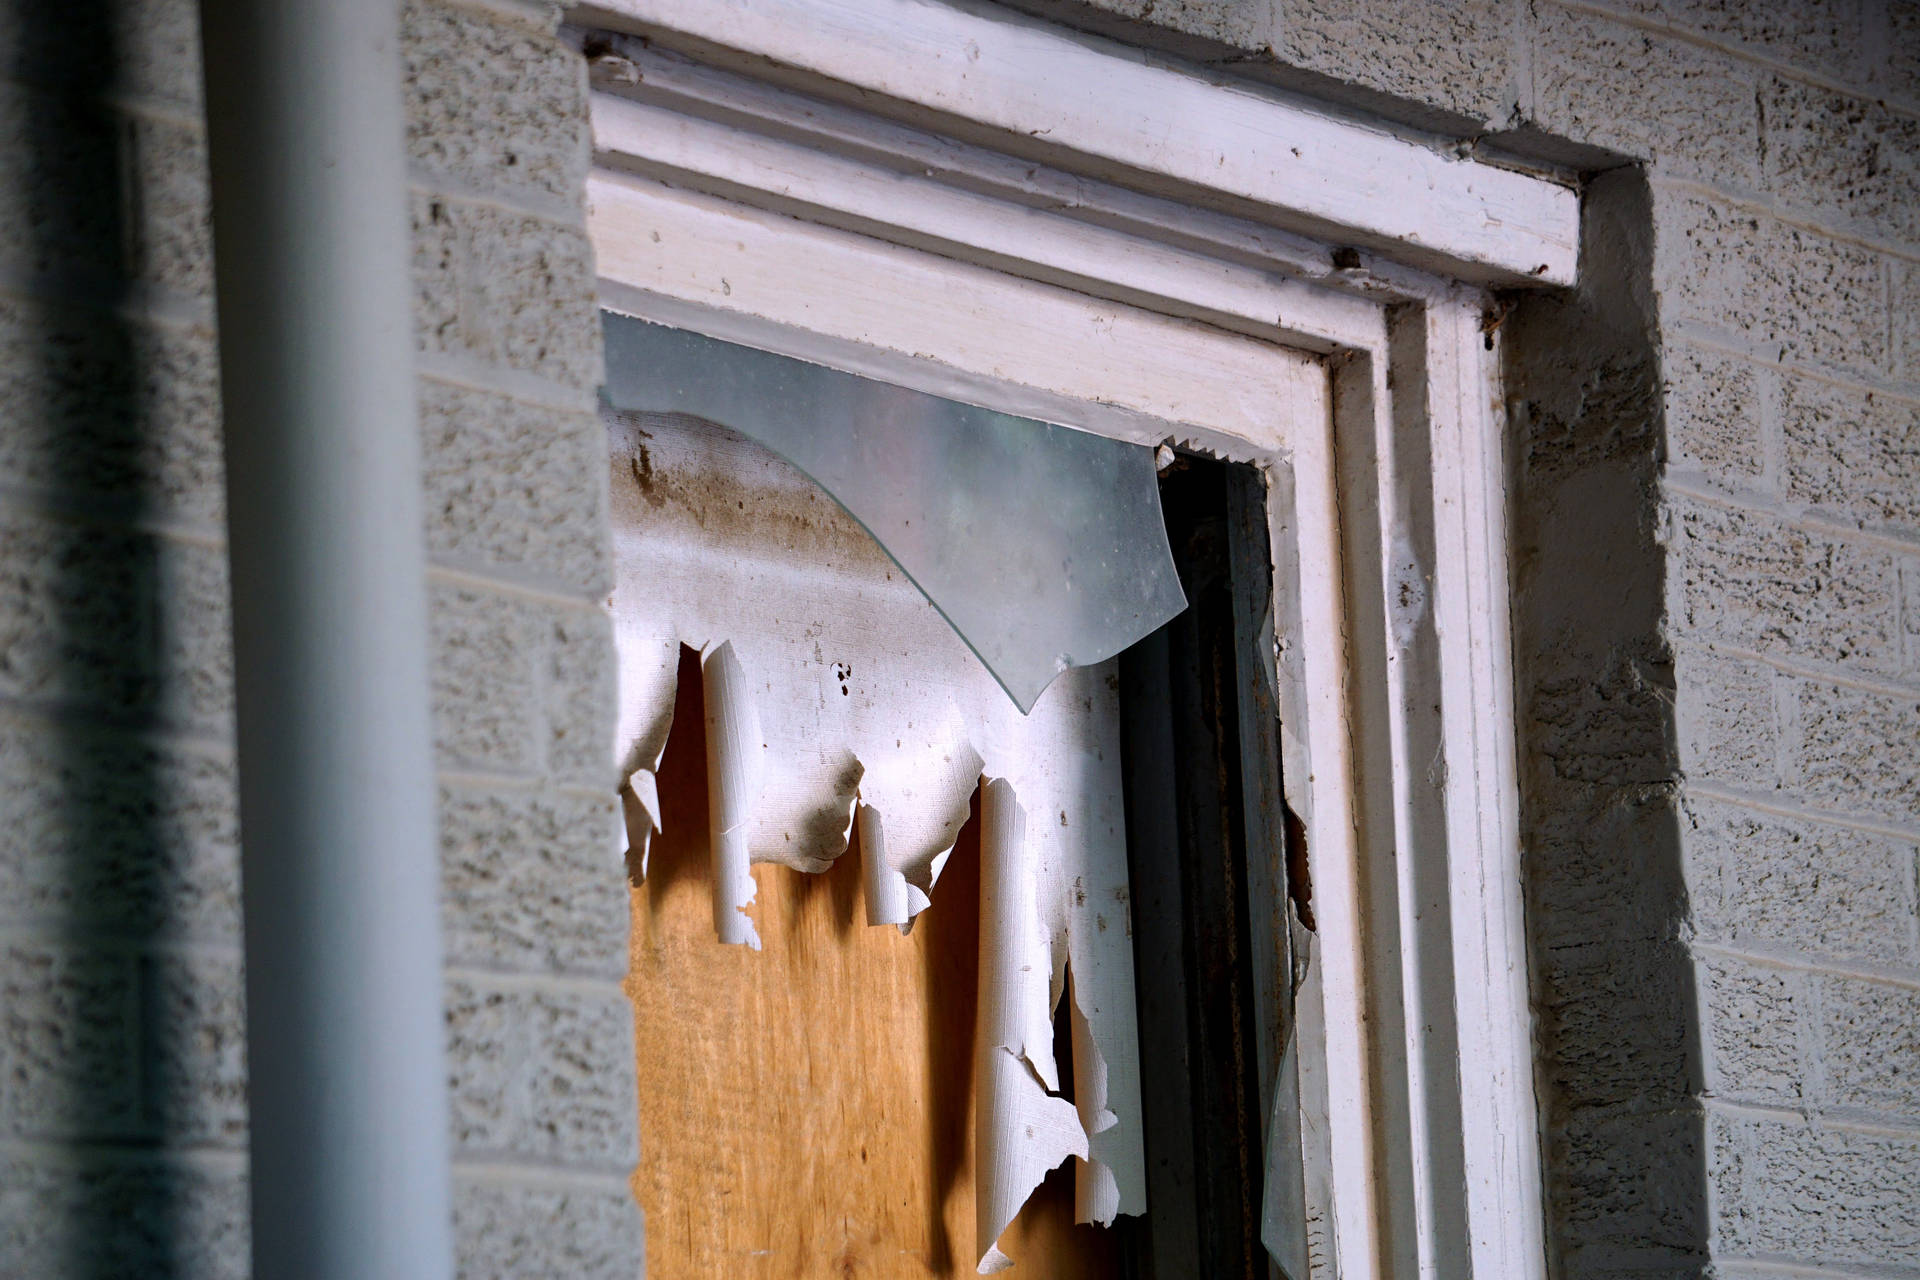 A Dramatic Display Of Sharp Shards On Broken Window